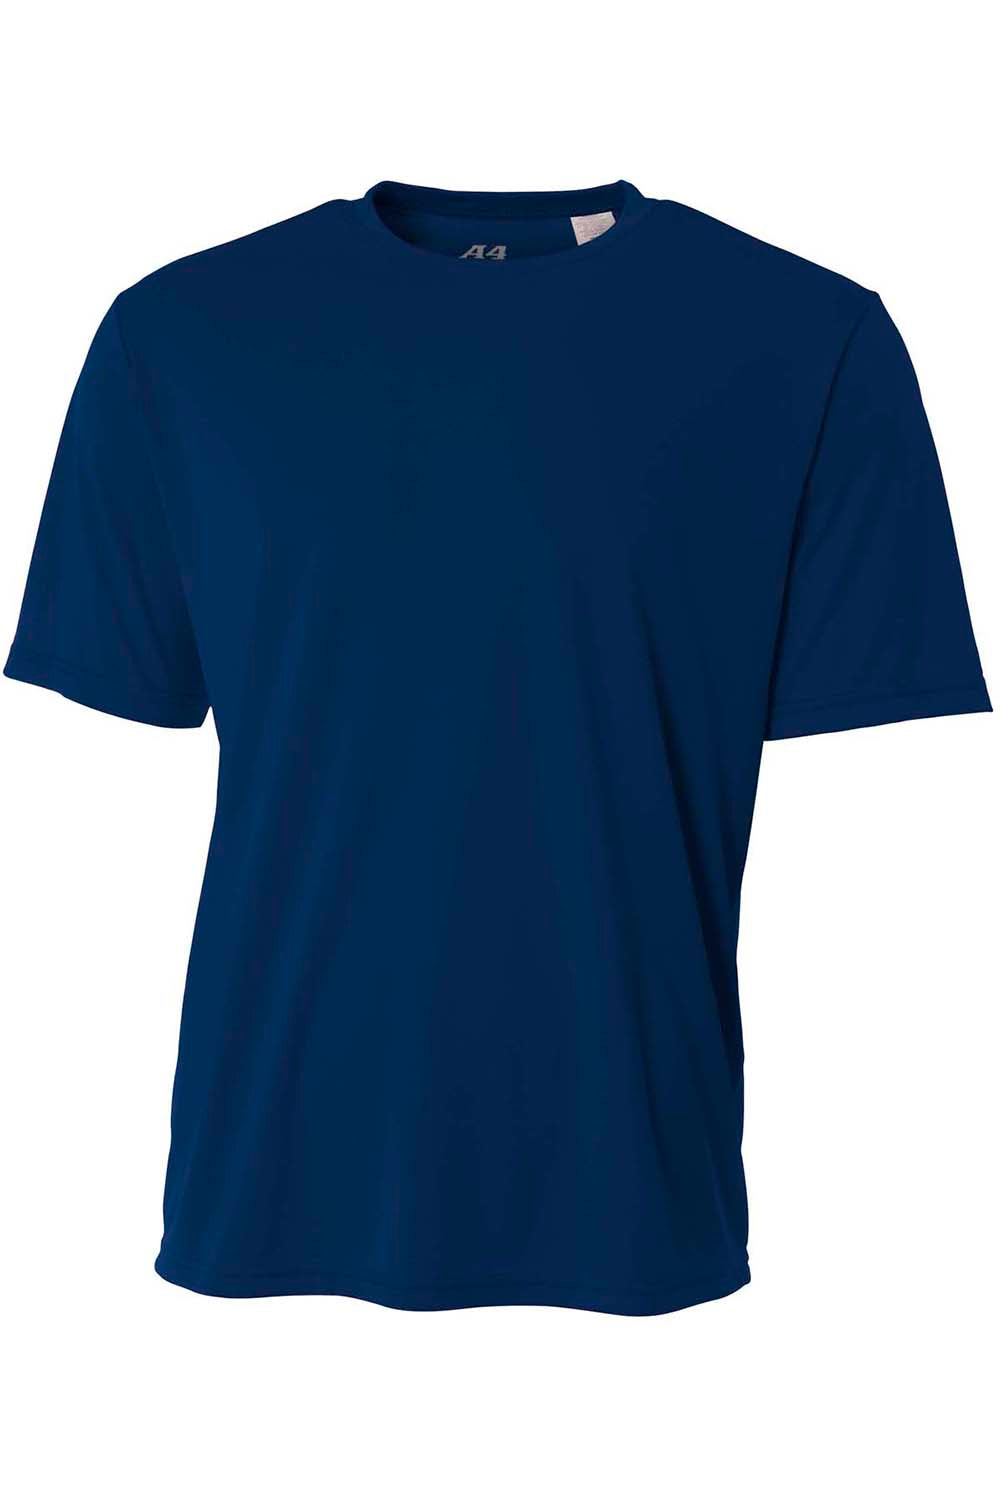 A4 N3142 Mens Performance Moisture Wicking Short Sleeve Crewneck T-Shirt Navy Blue Flat Front